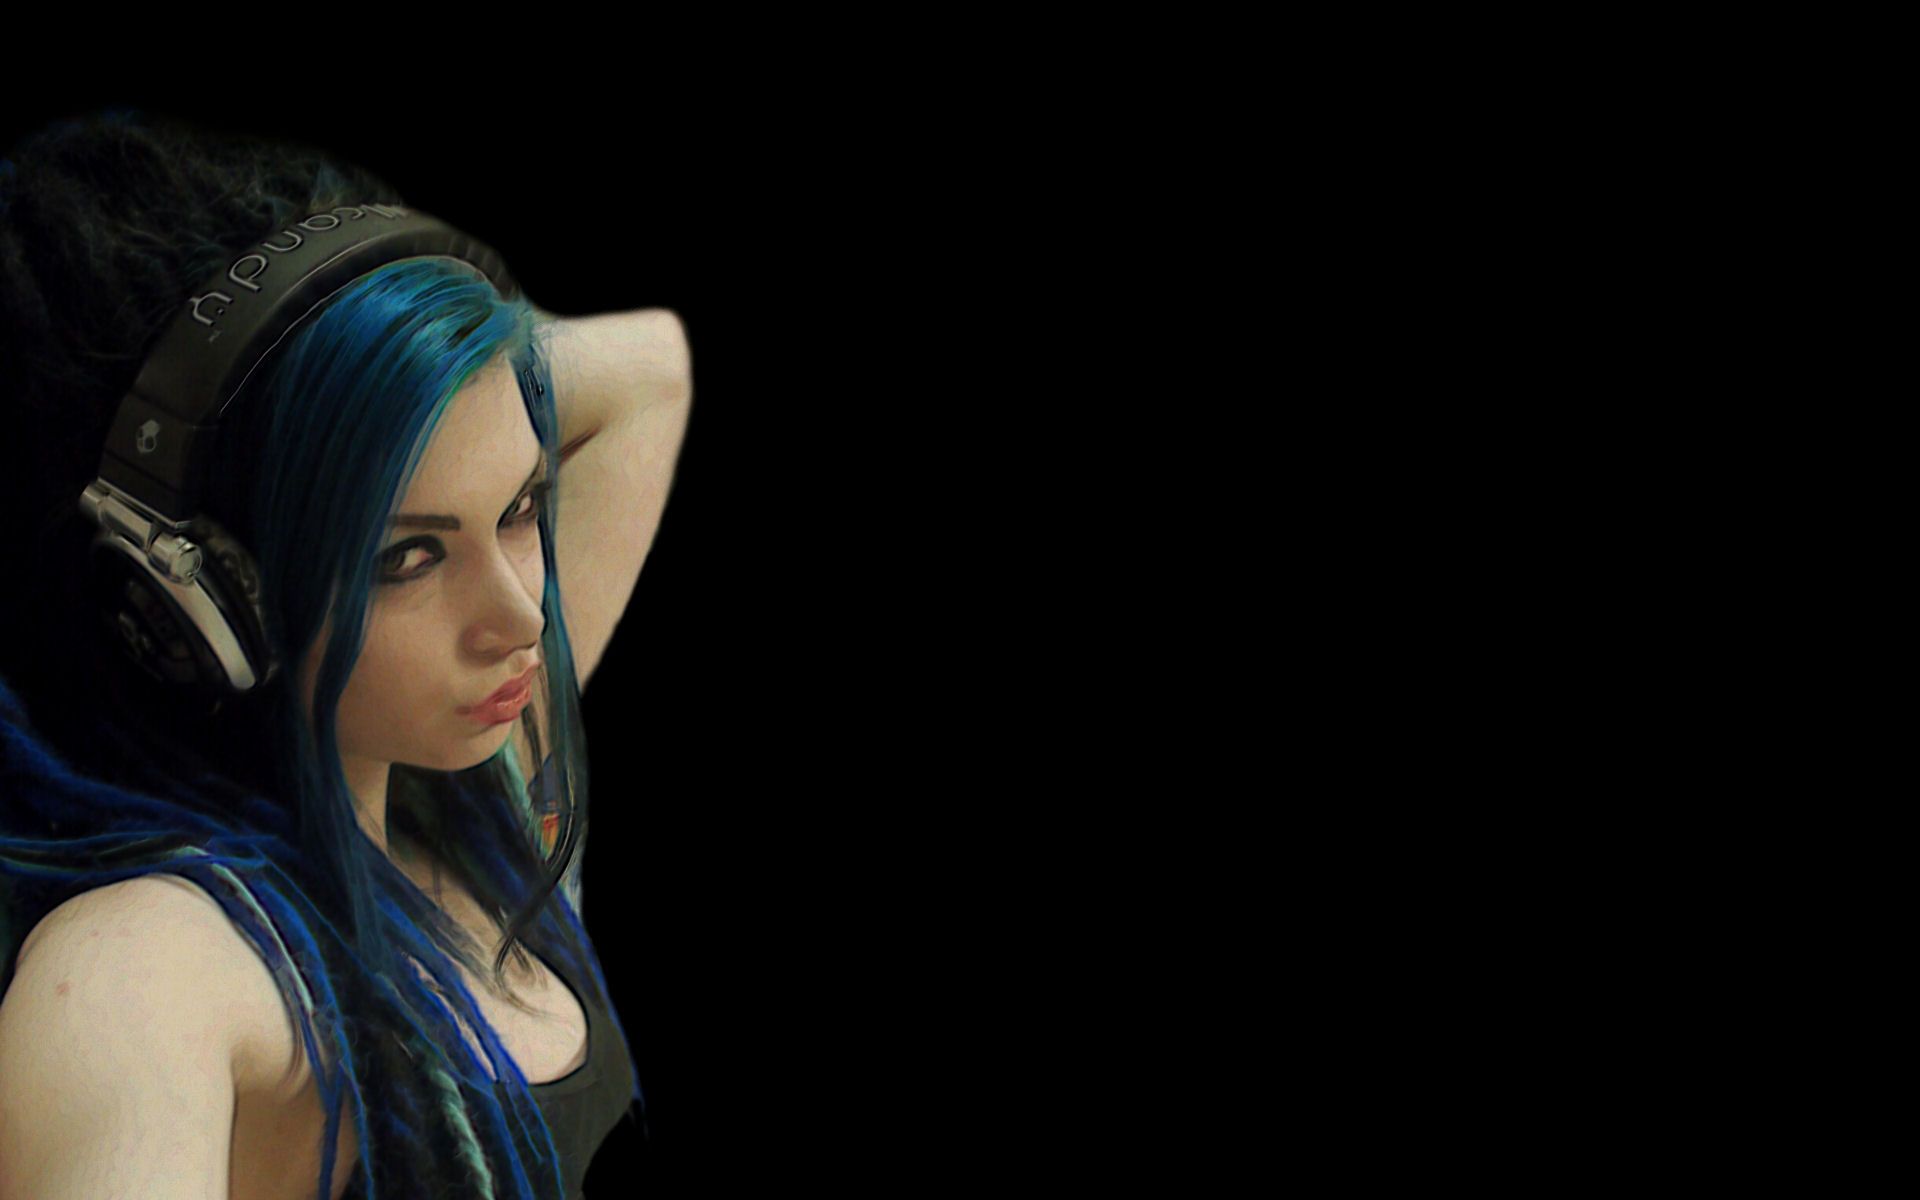 blue hair headphones girl duck face 1920x1200 wallpaper High Quality Wallpaper, High Definition Wallpaper